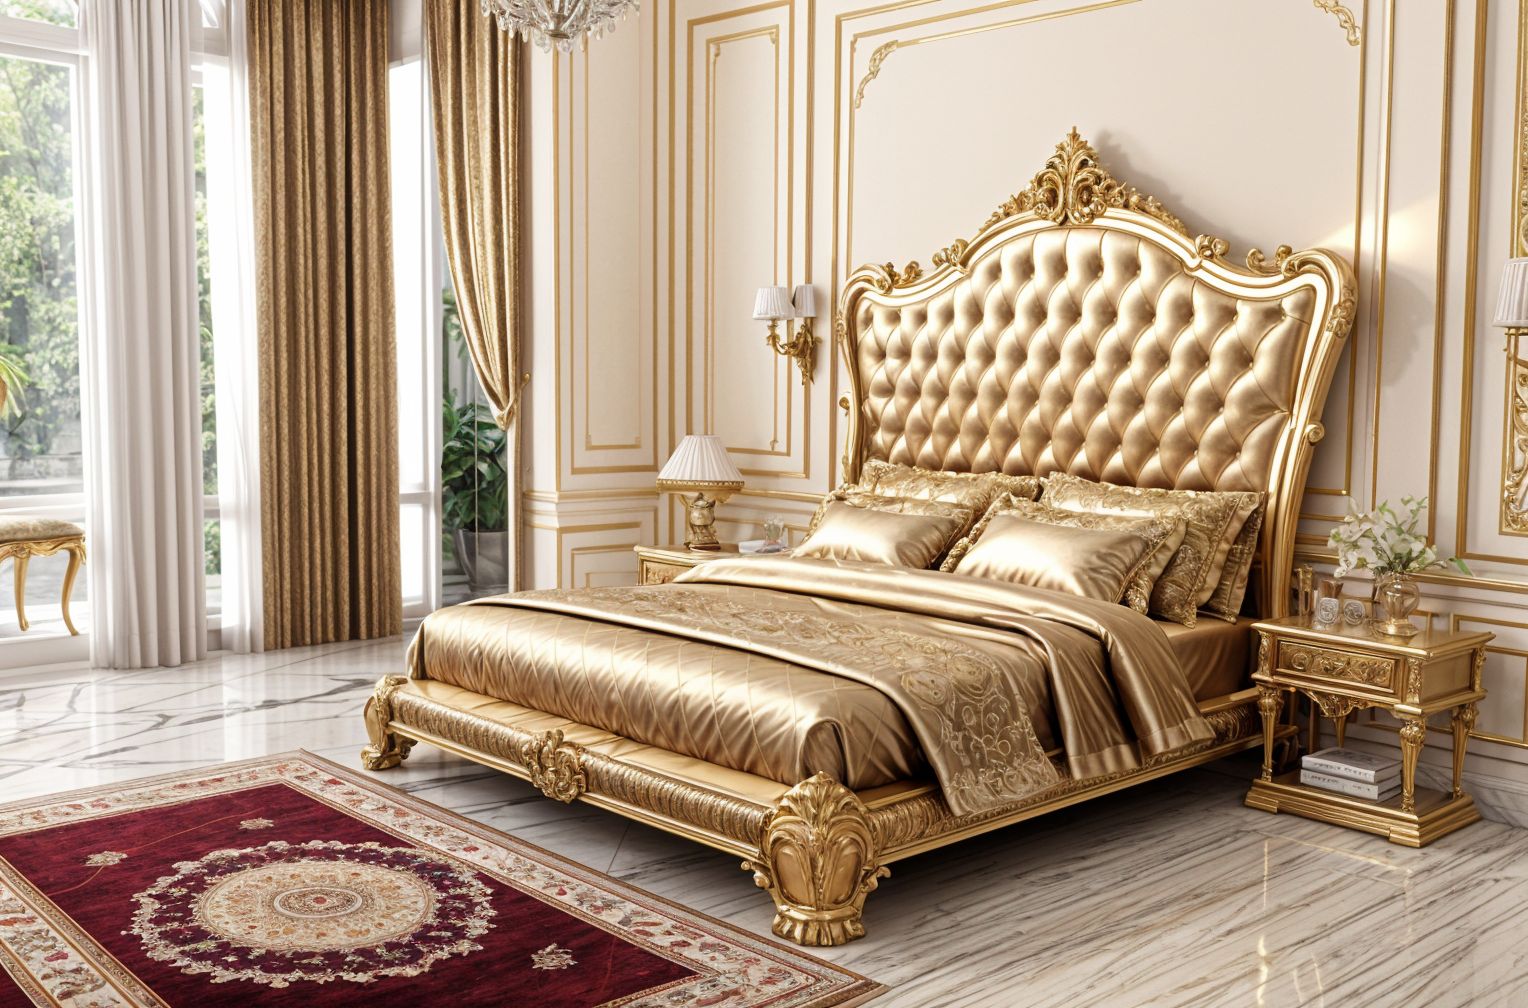 Luxurious style Bedroom